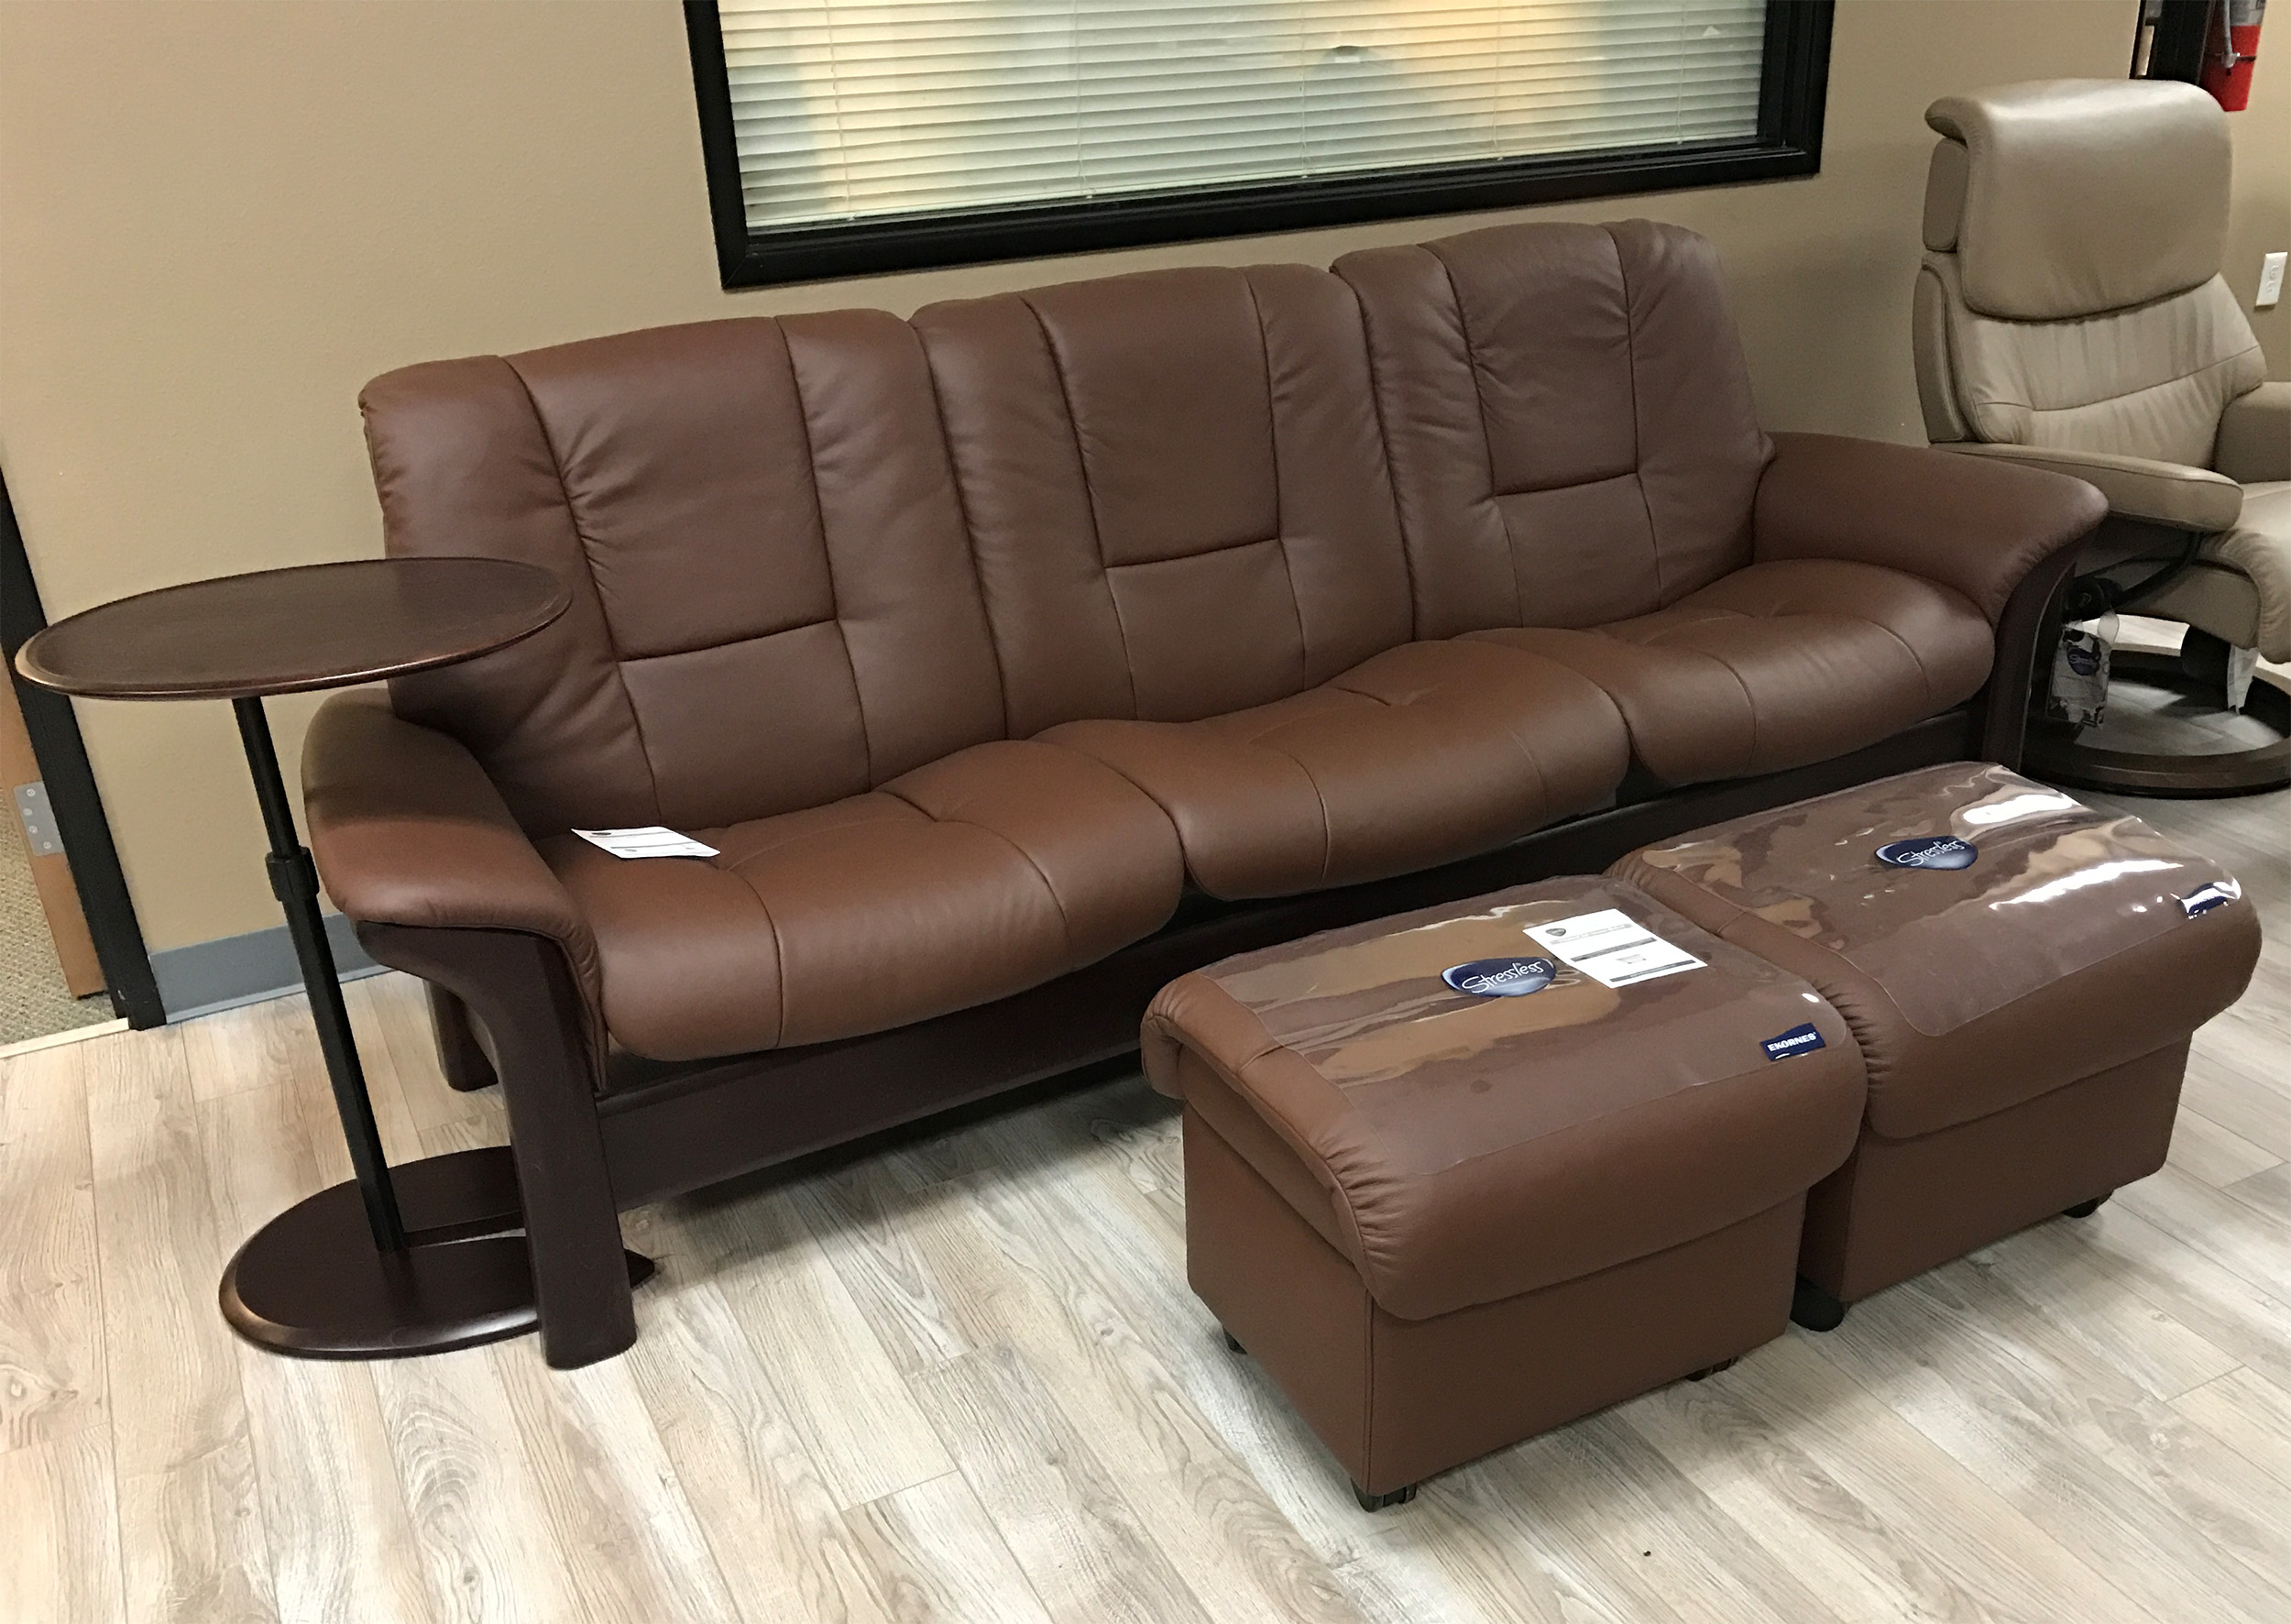 stressless leather sofa ebay